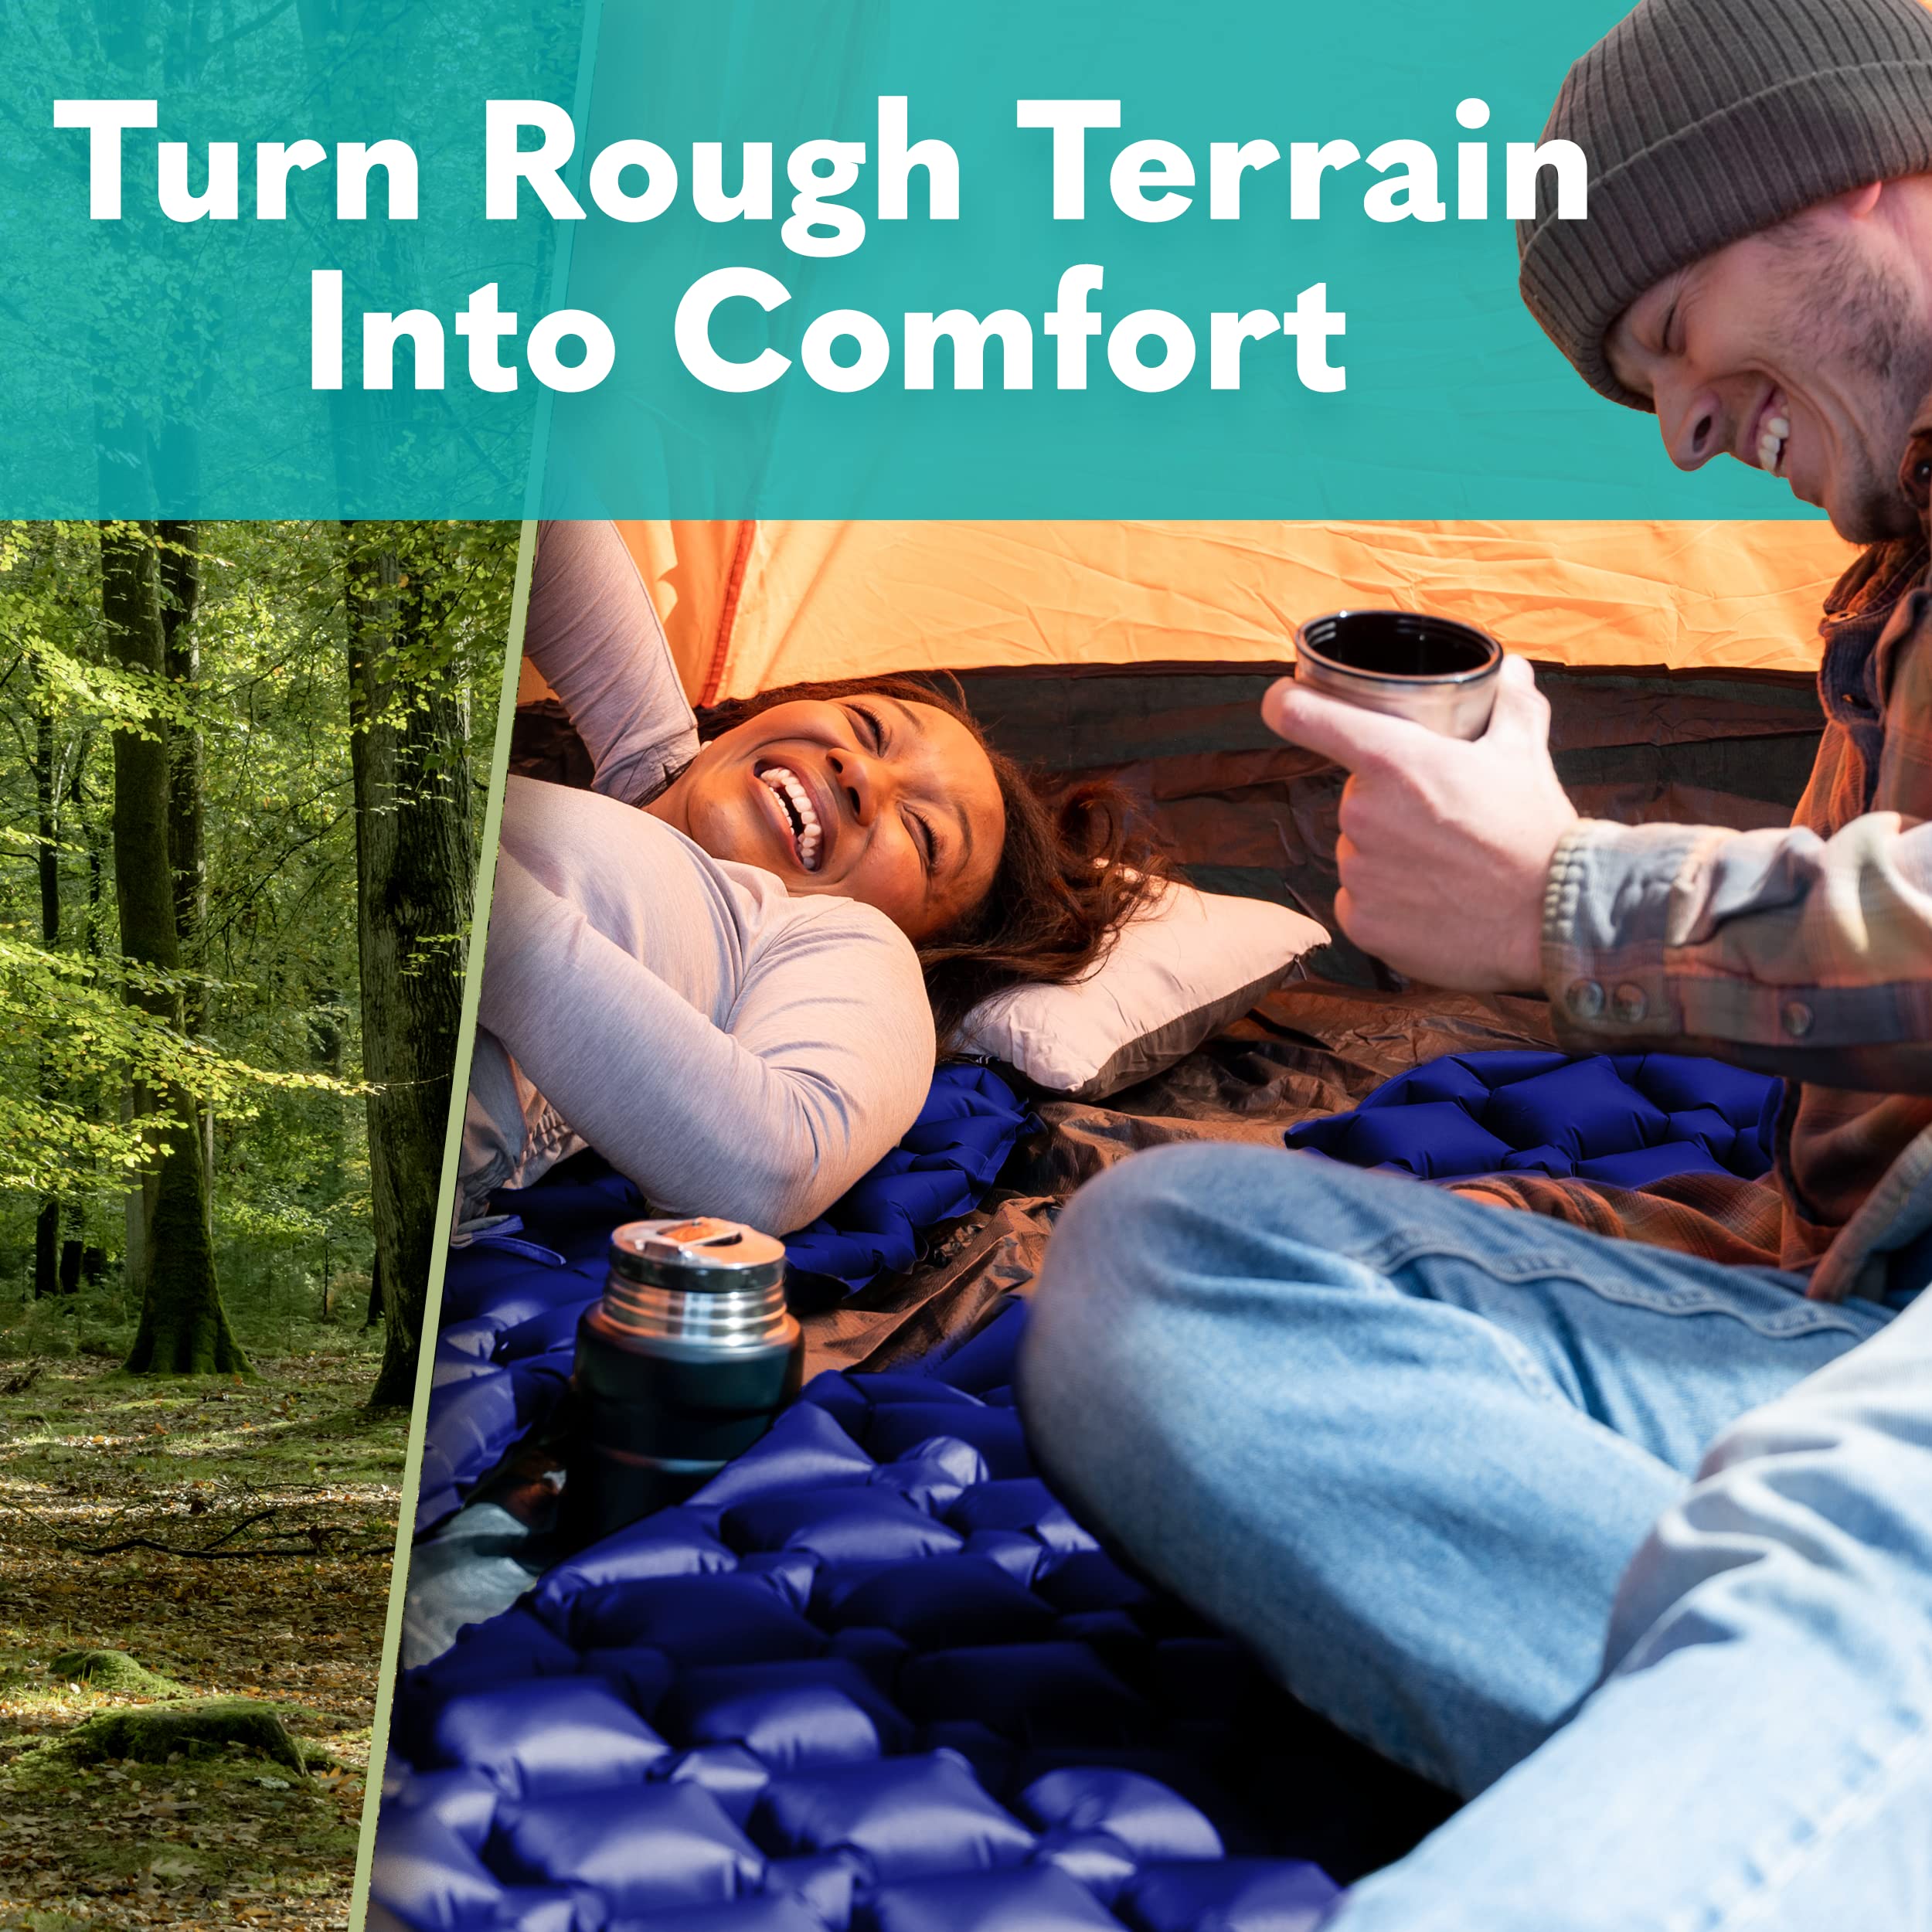 Sleepingo Sleeping Pad for Camping - Ultralight Sleeping Mat for Camping, Backpacking, Hiking - Lightweight, Inflatable & Compact Camping Air Mattress  - Like New